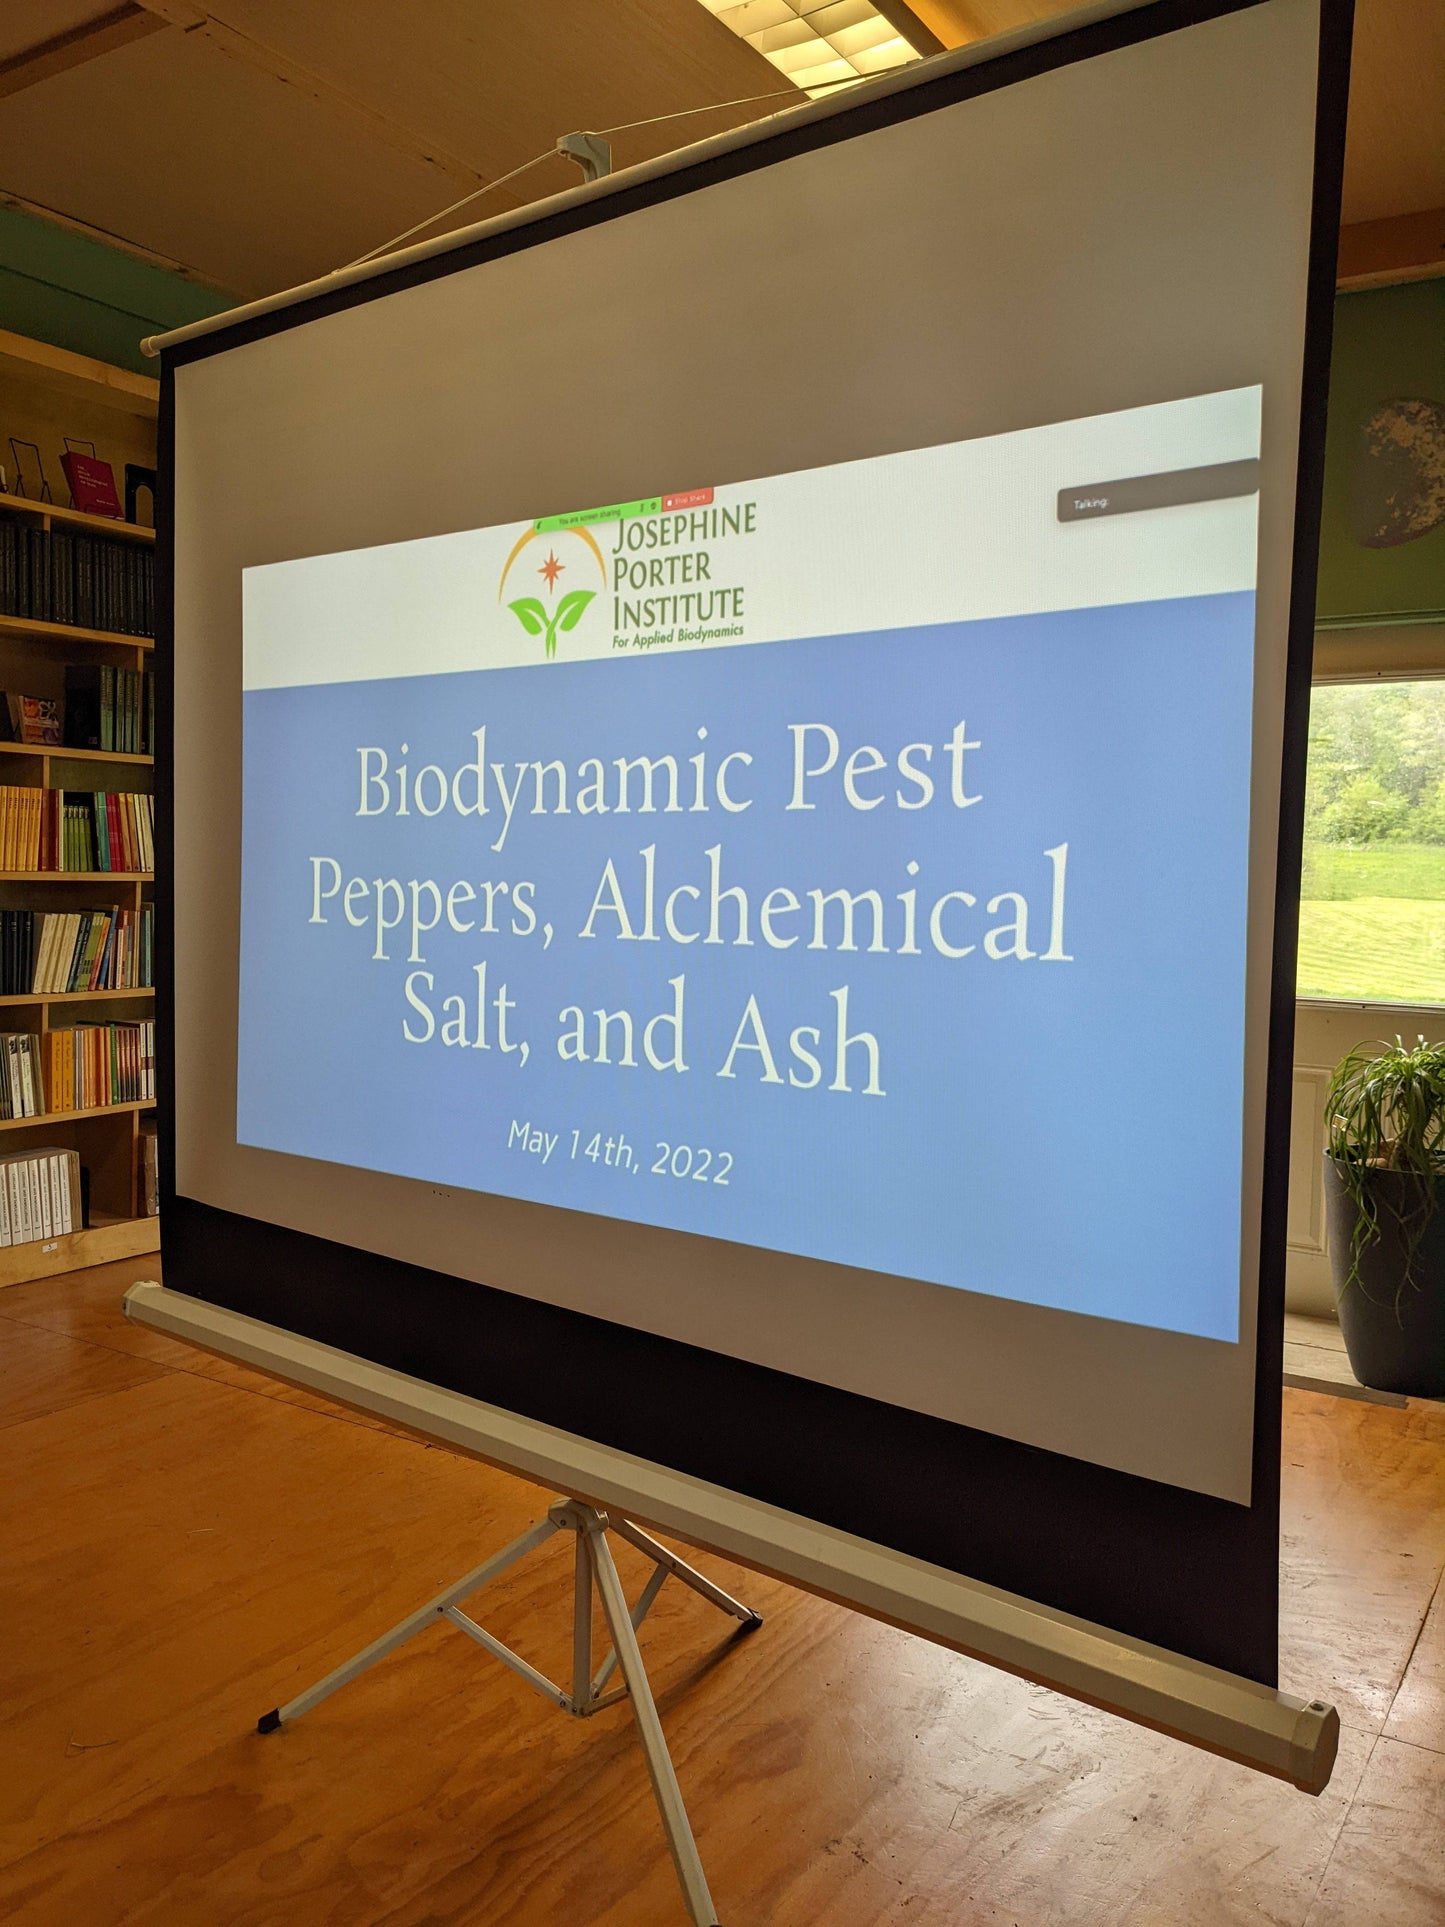 2022 Biodynamic Pest Pepper Video (Recording) - The Josephine Porter Institute